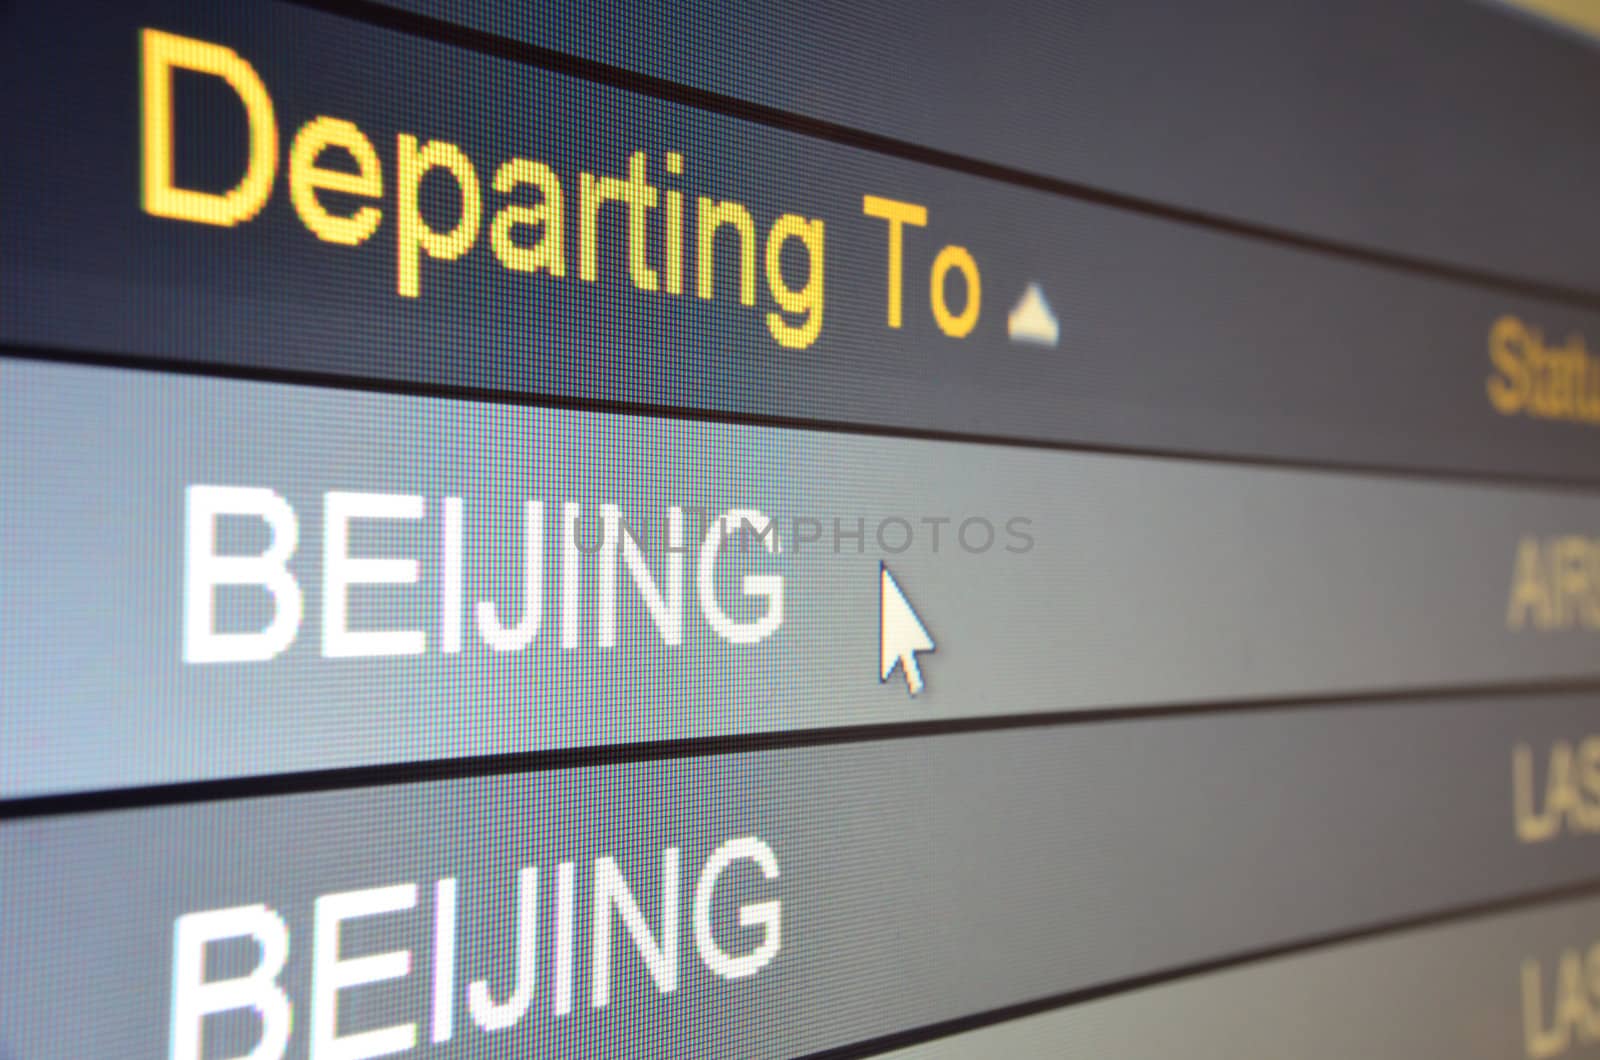 Flight departing to Beijing by artofphoto